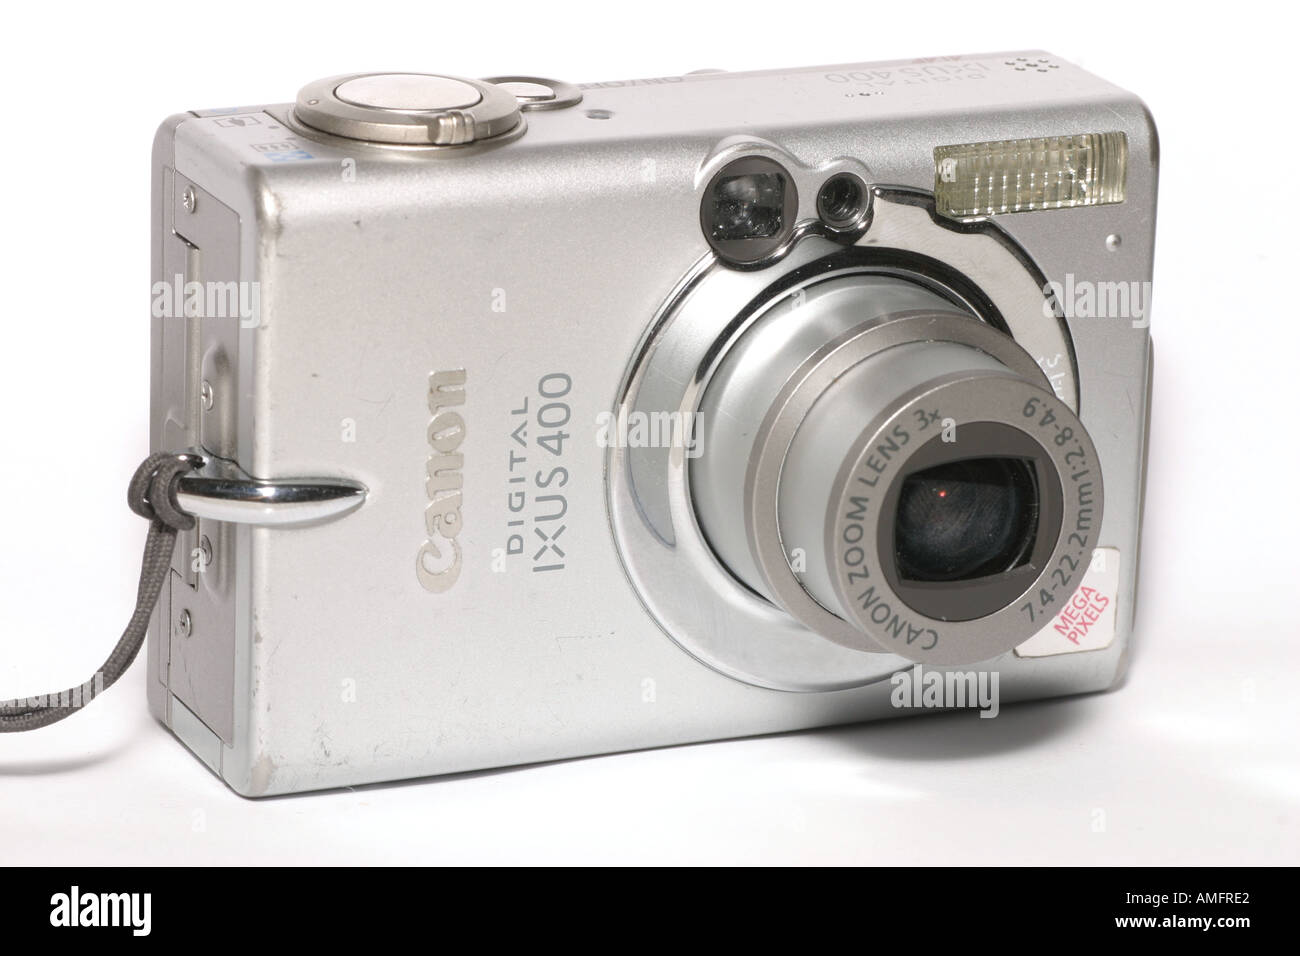 A Canon DIgital Ixus 400 compact digital camera with 4 Megapixels Stock Photo